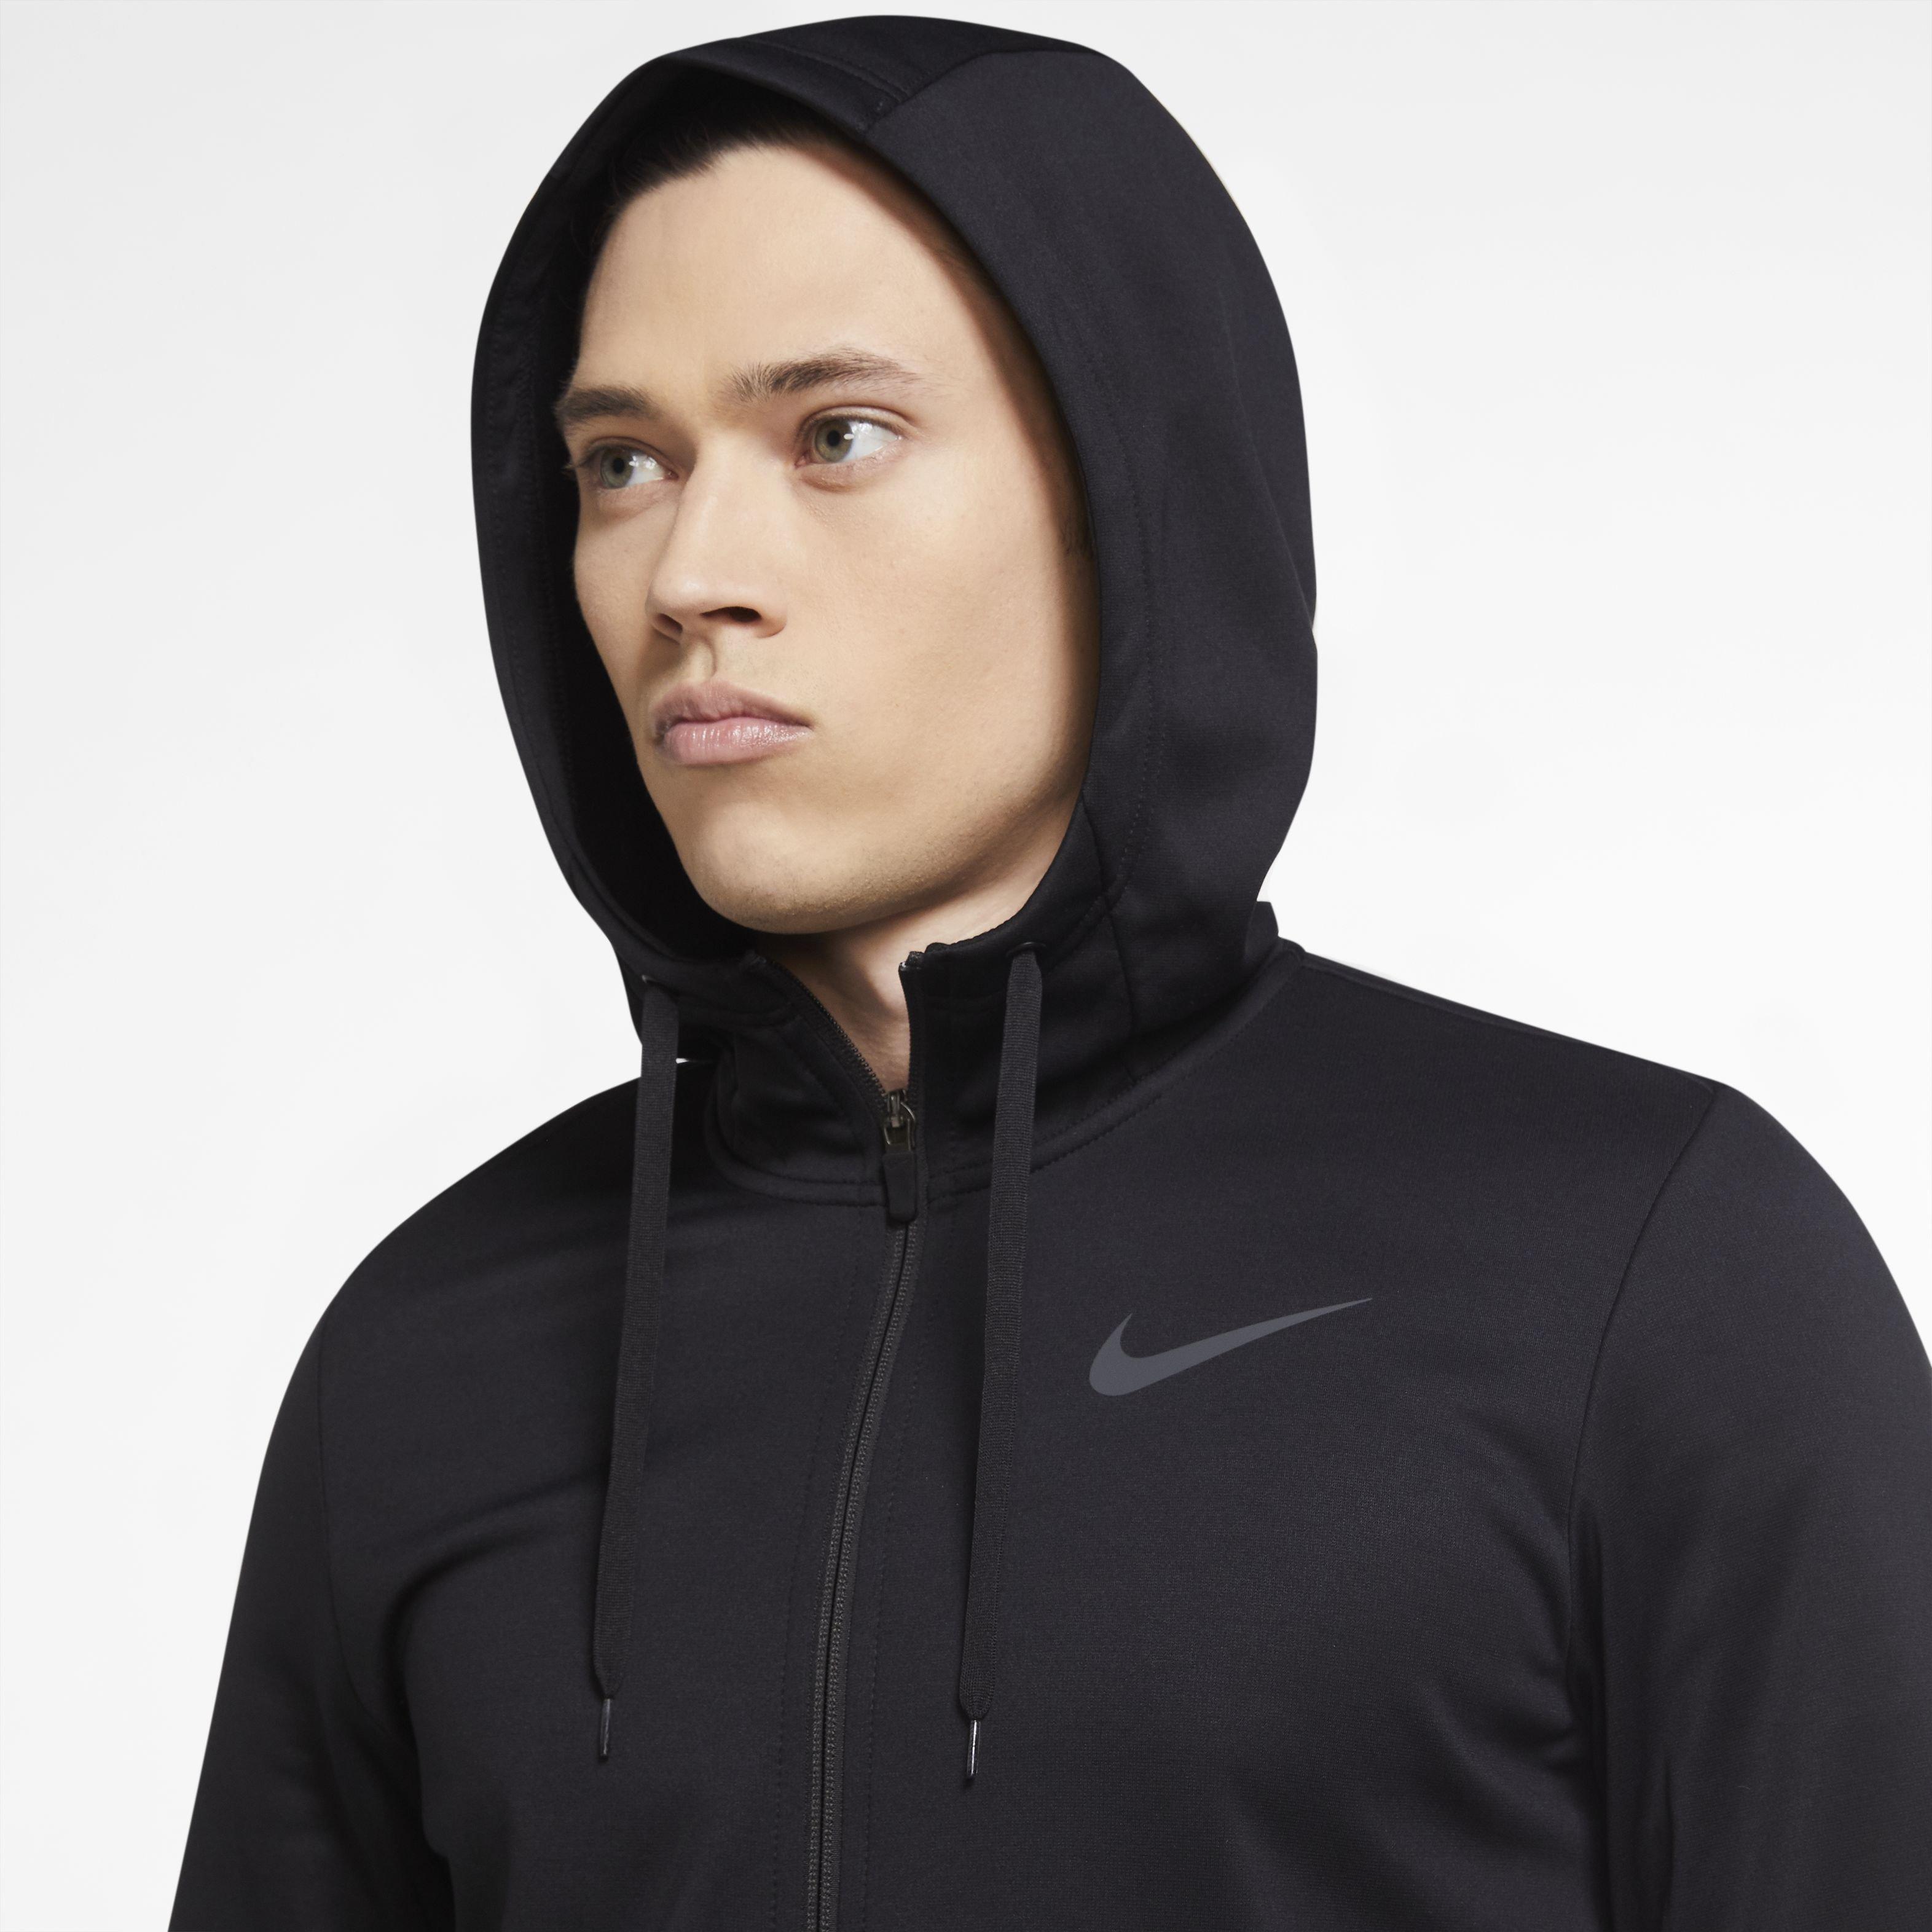 Nike Therma Men's Full-Zip Training Hoodie.